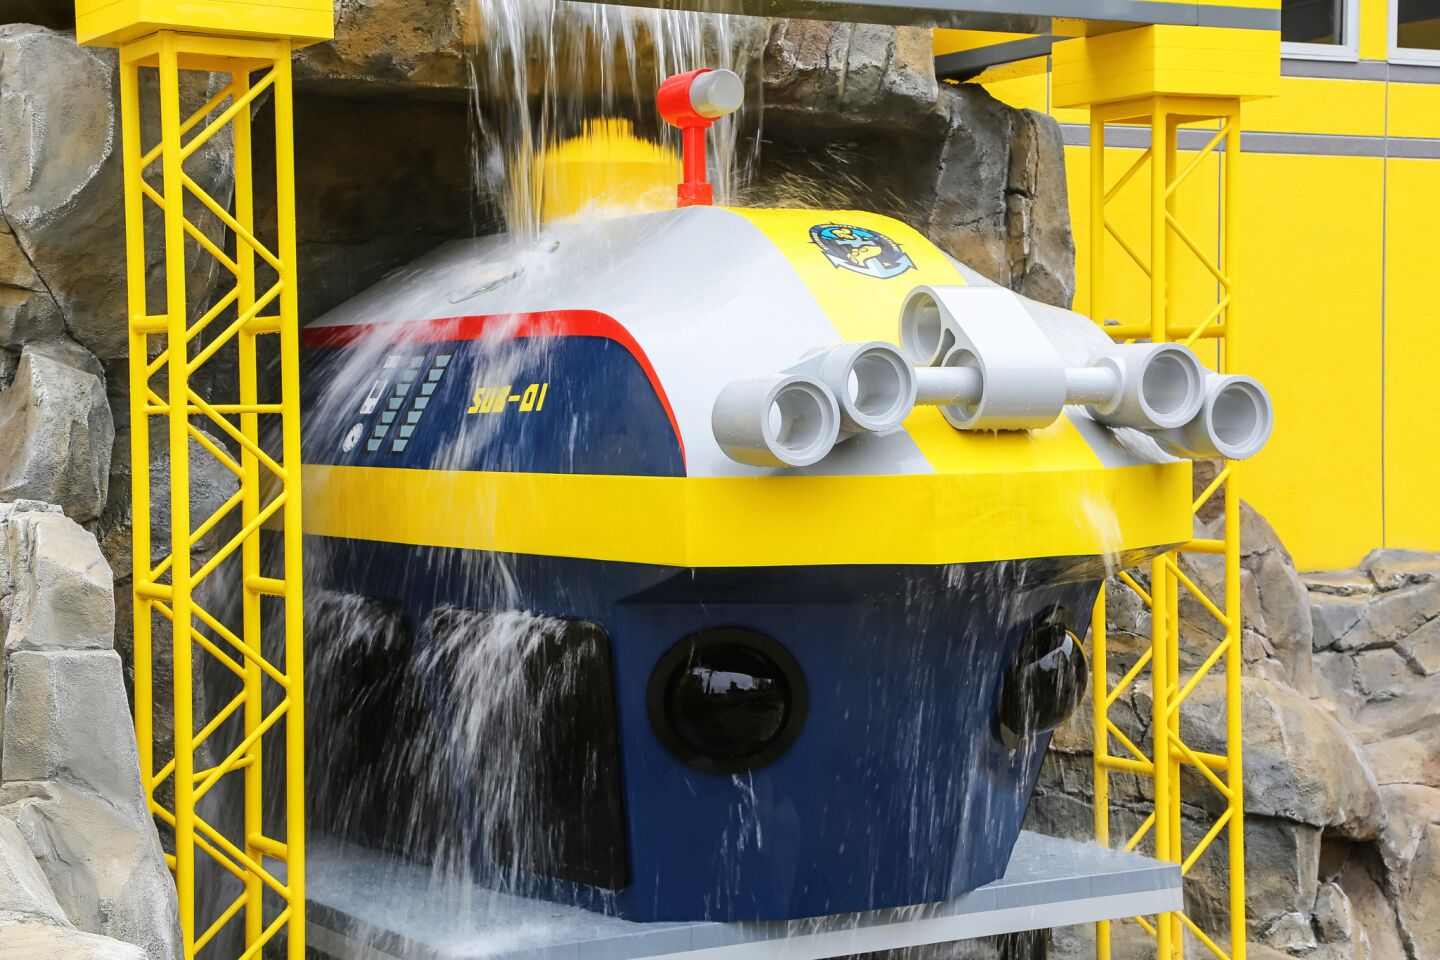 New Submarine Ride at Legoland